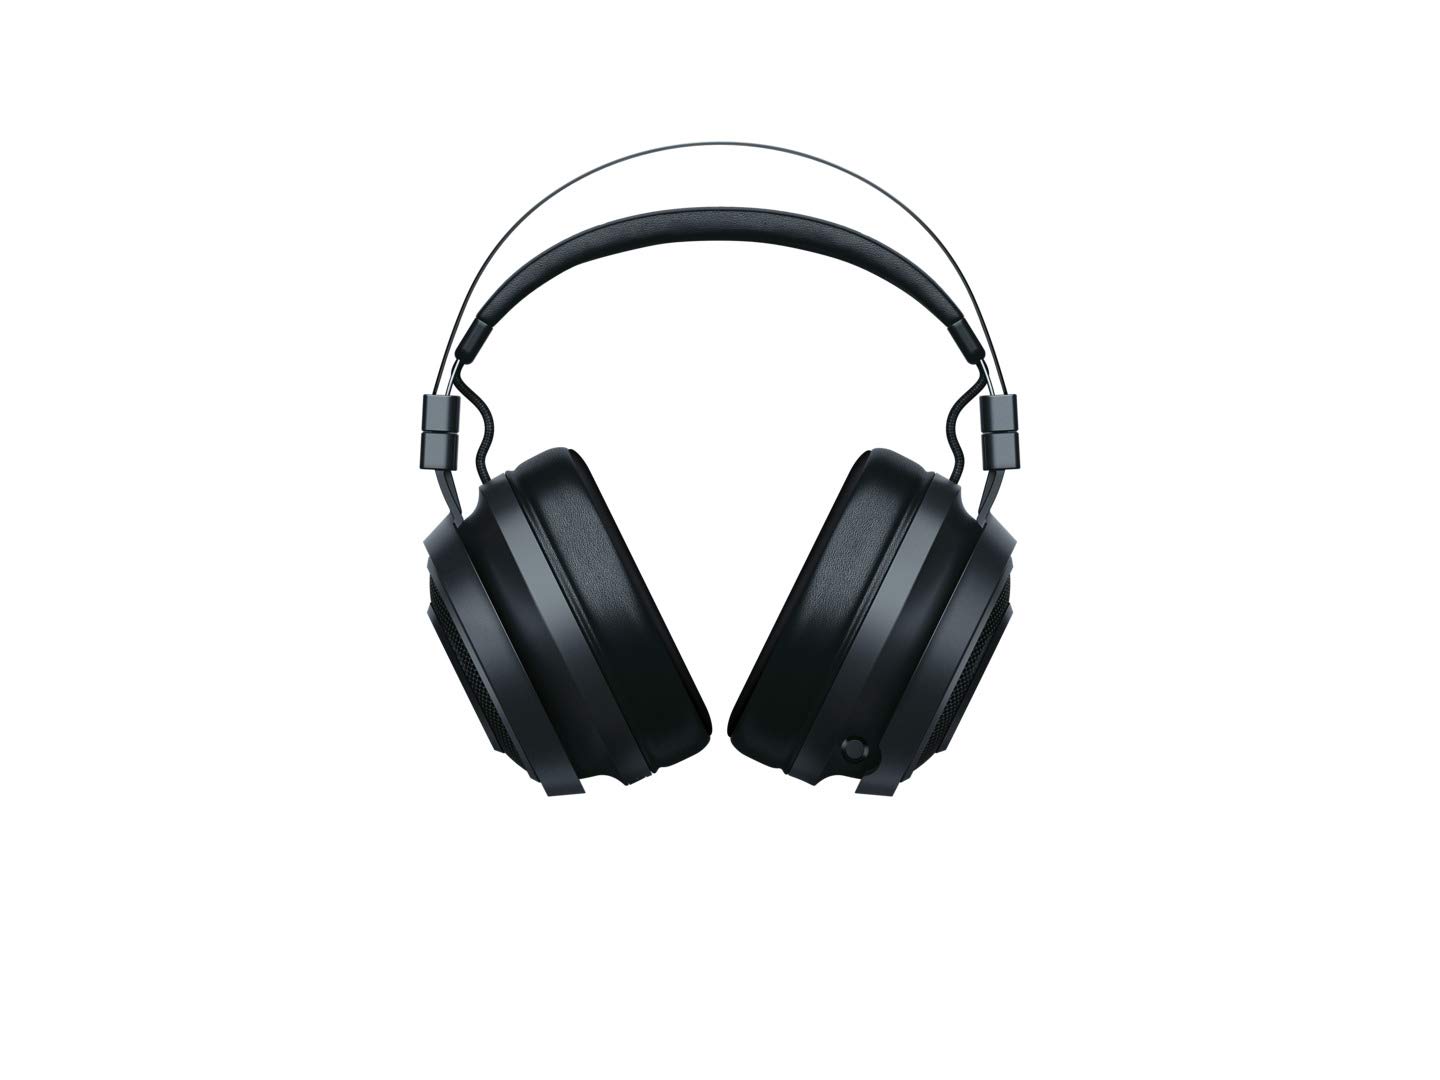 Razer Nari Wireless 7.1 Surround Sound Gaming Headset: THX Audio, Auto-Adjust Headband & Swivel Cups, Chroma RGB, Retractable Mic, For PC, PS4, PS5, Black